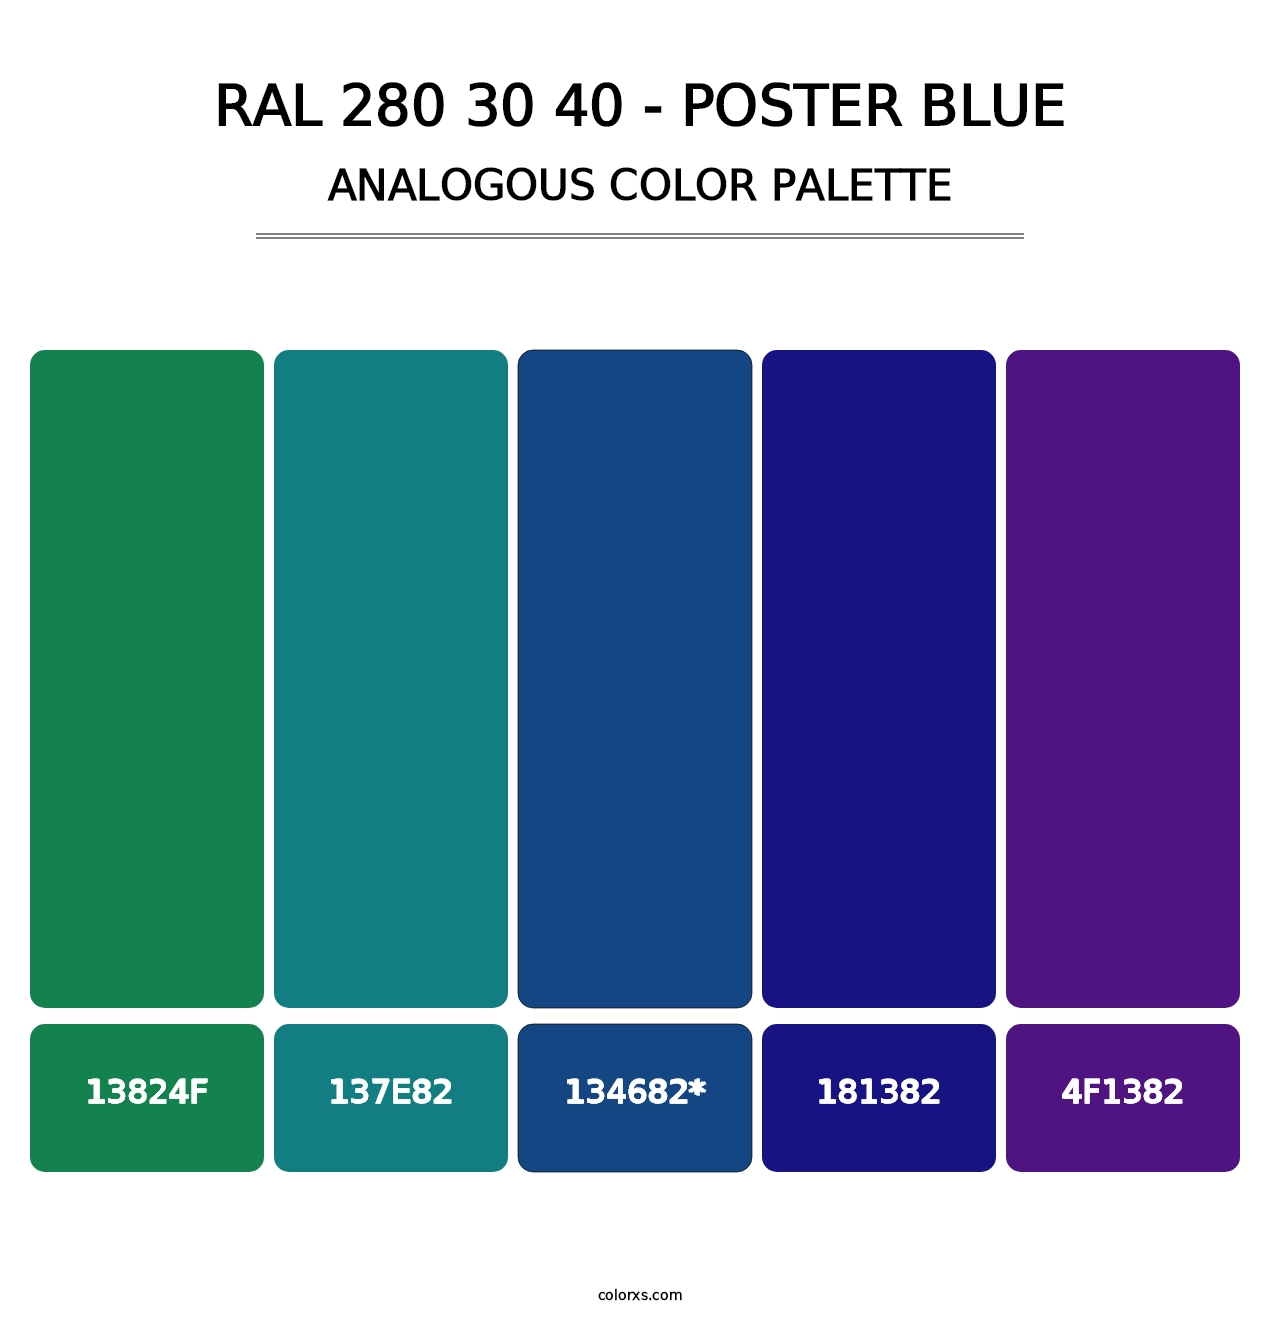 RAL 280 30 40 - Poster Blue - Analogous Color Palette